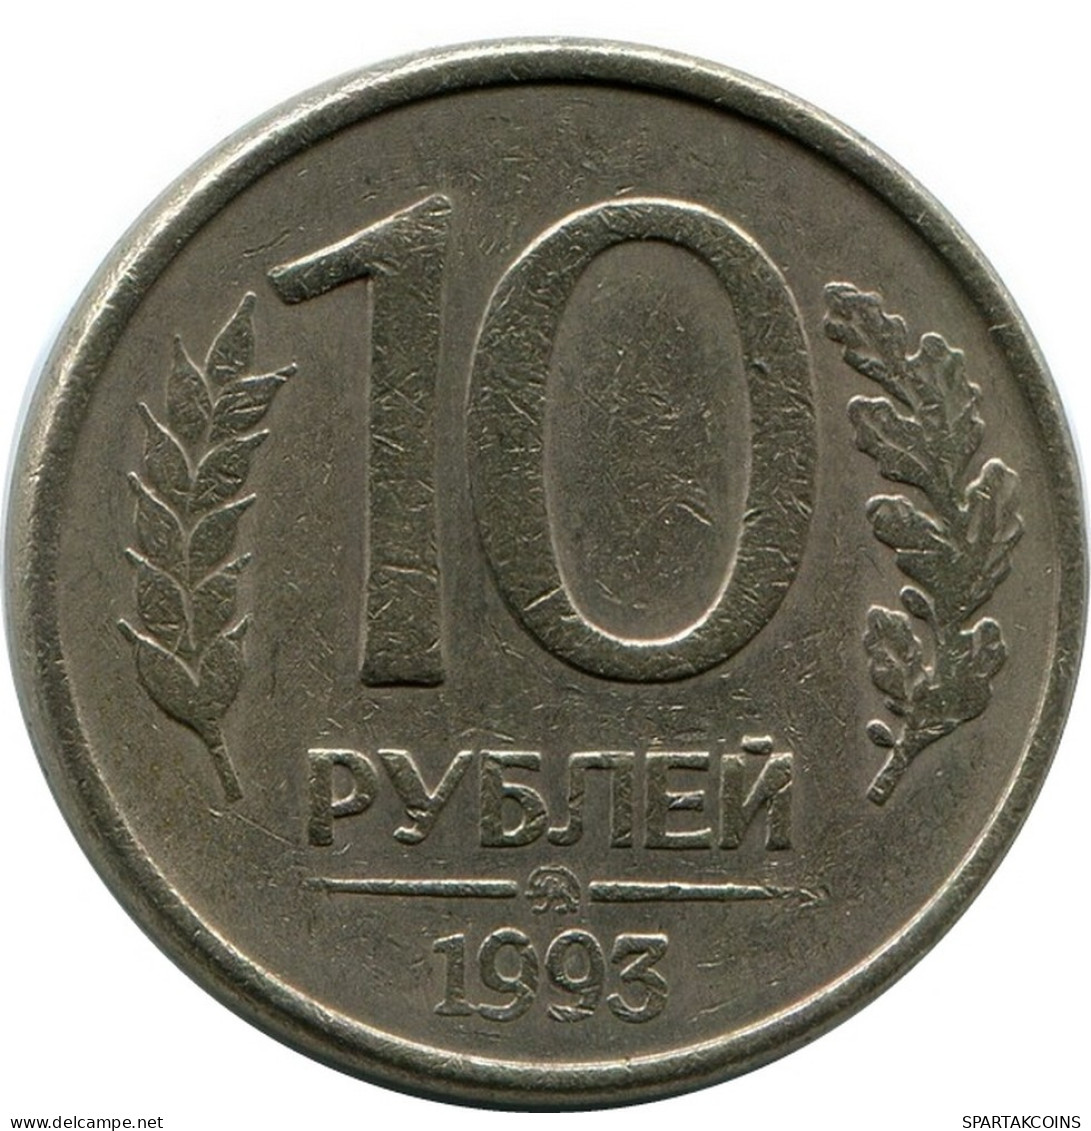 1 RUBLE 1993 RUSSIA USSR Coin #AR141.U.A - Russia